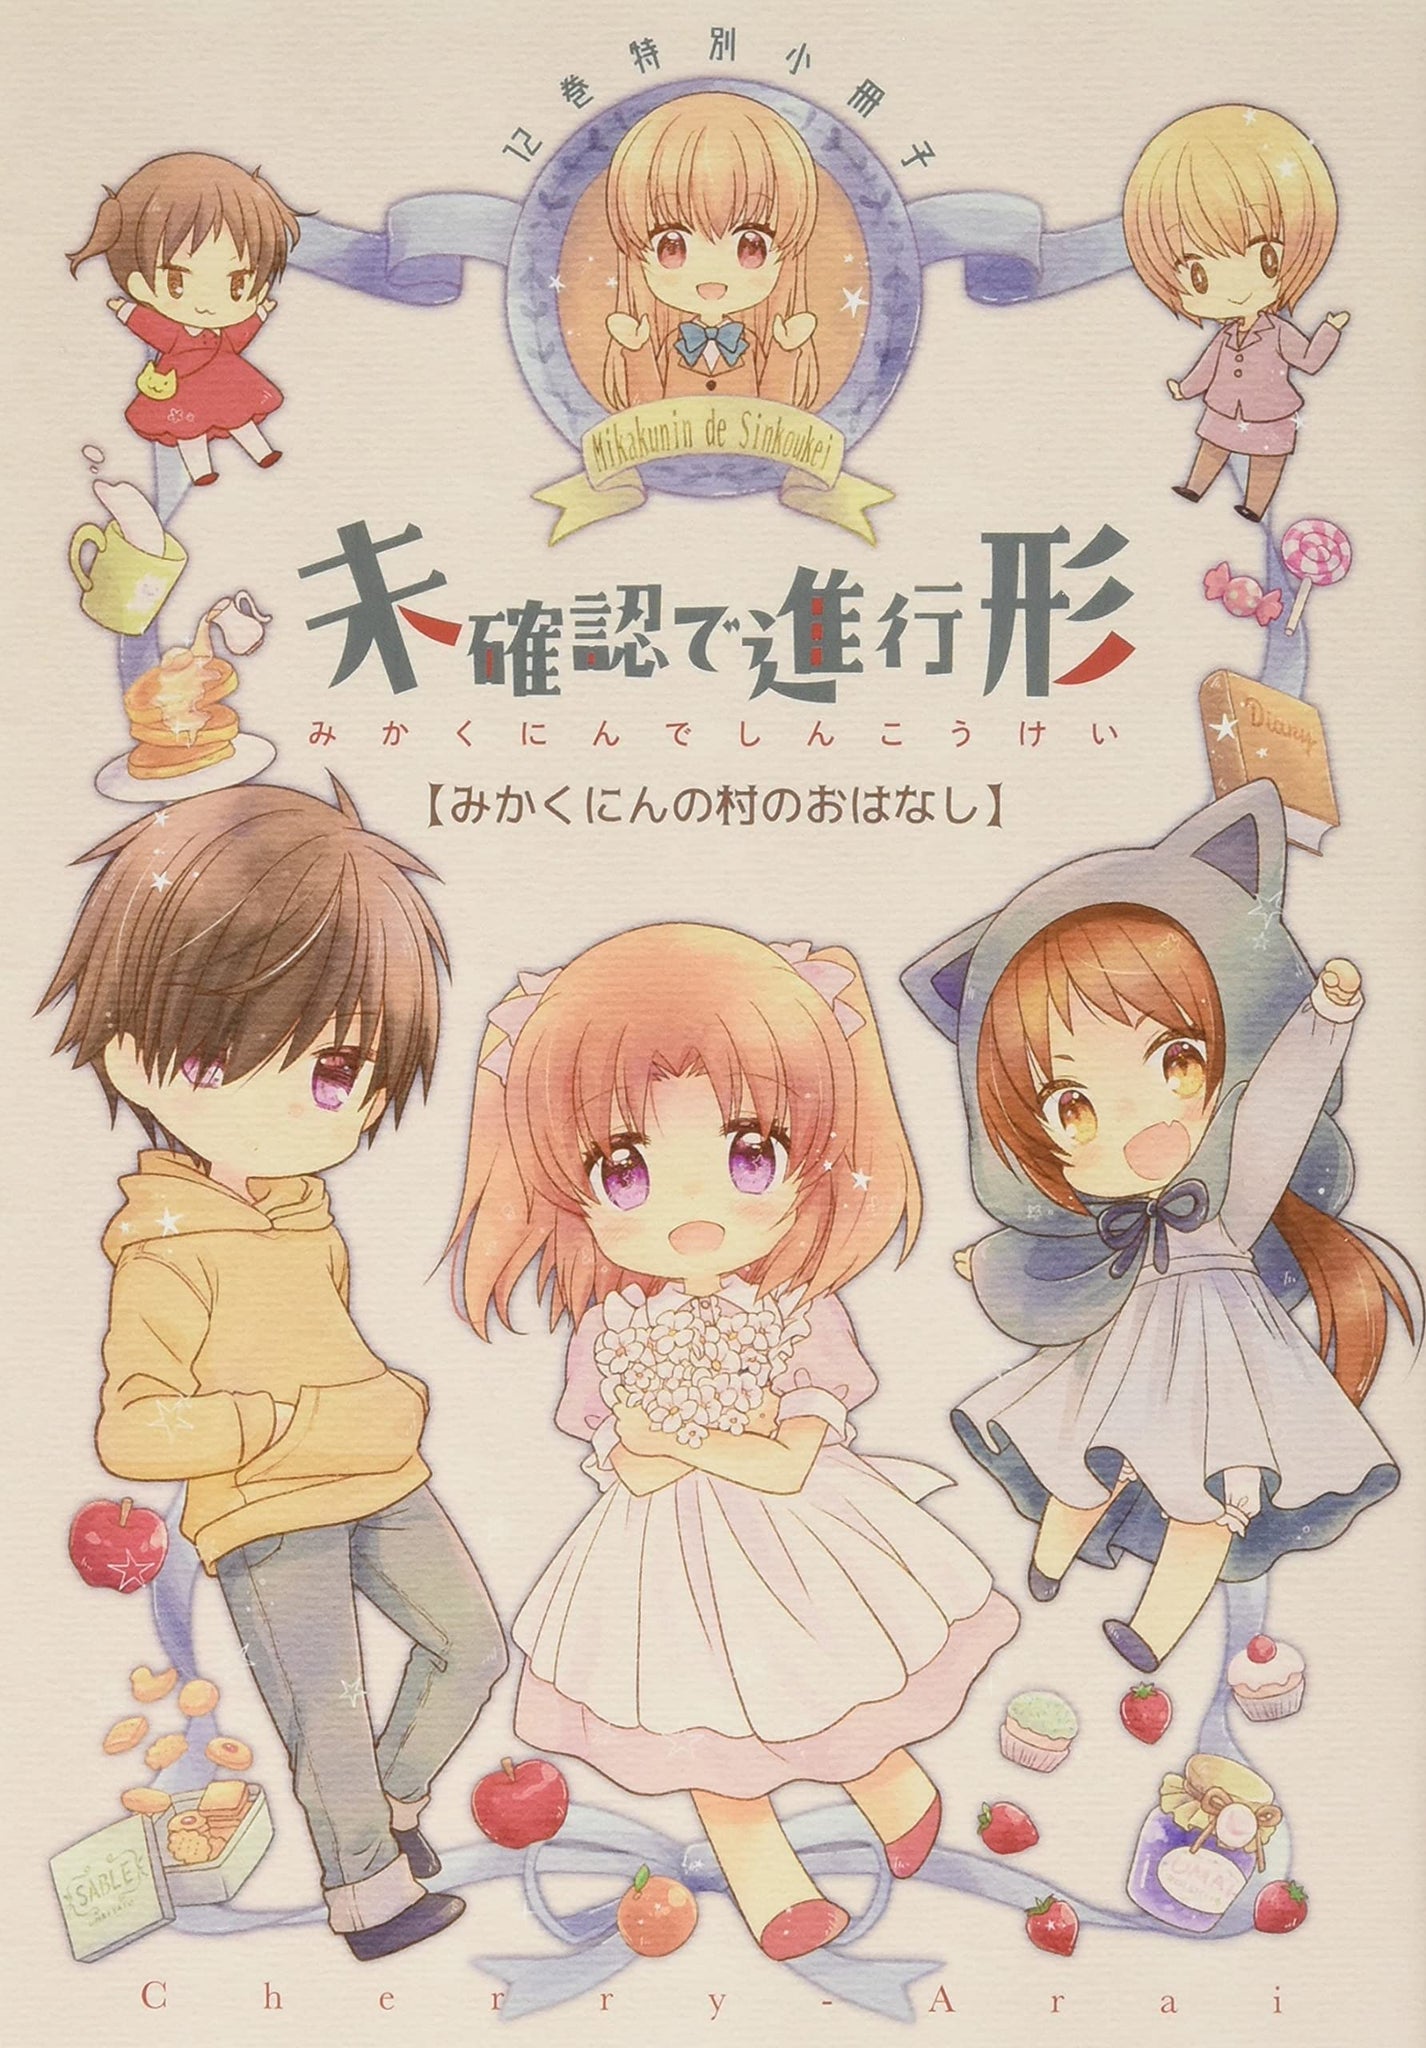 Engaged to the Unidentified (Mikakunin de Shinkoukei) 15 Special Edition –  Japanese Book Store